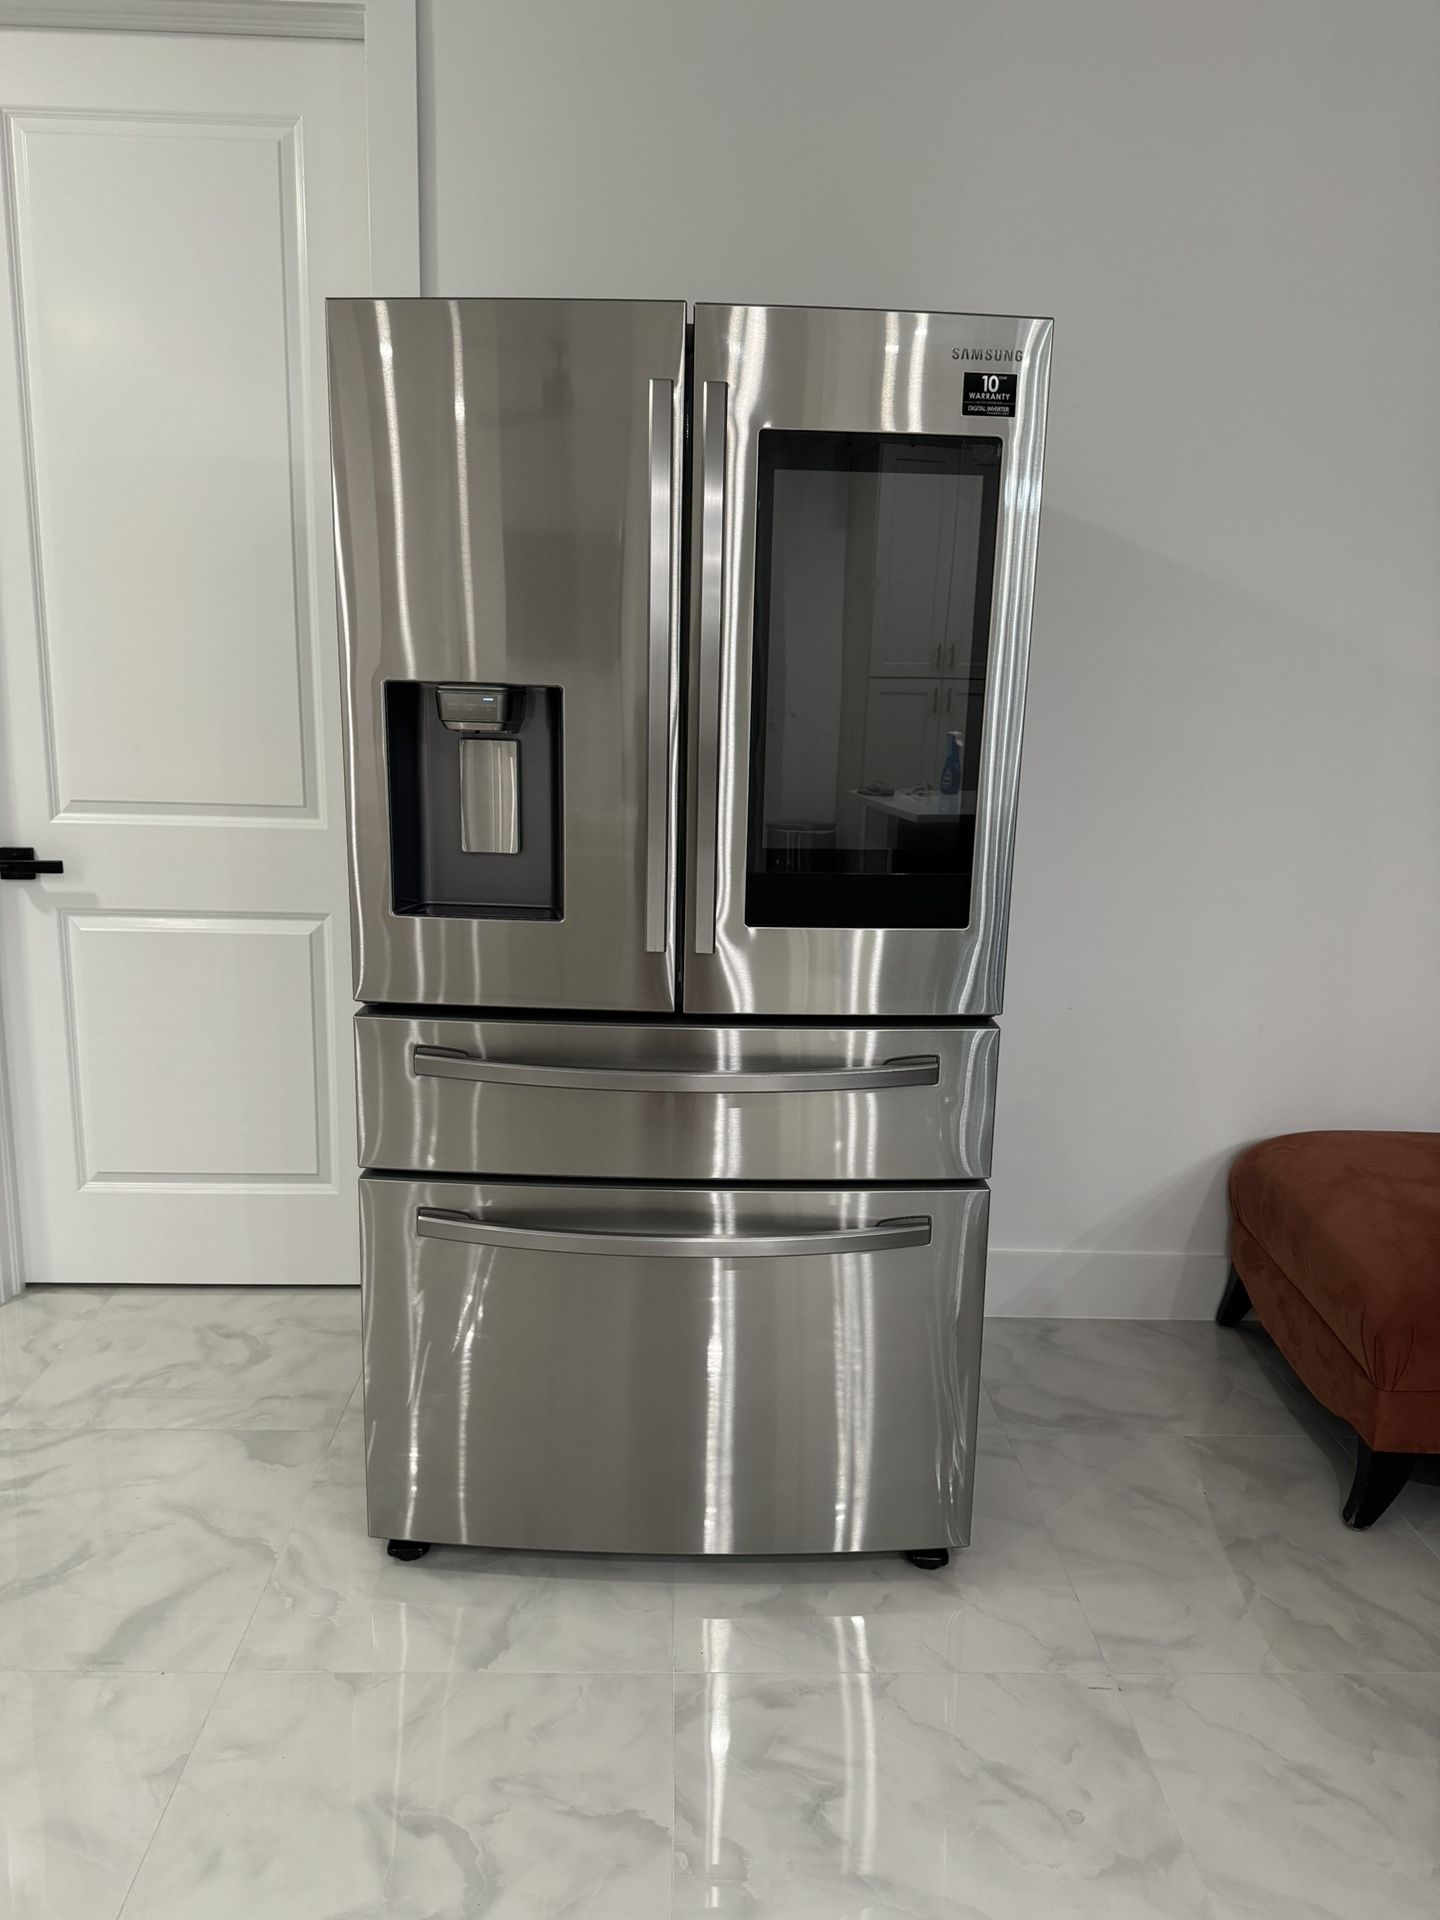 Samsung Refrigerator With Family Hub